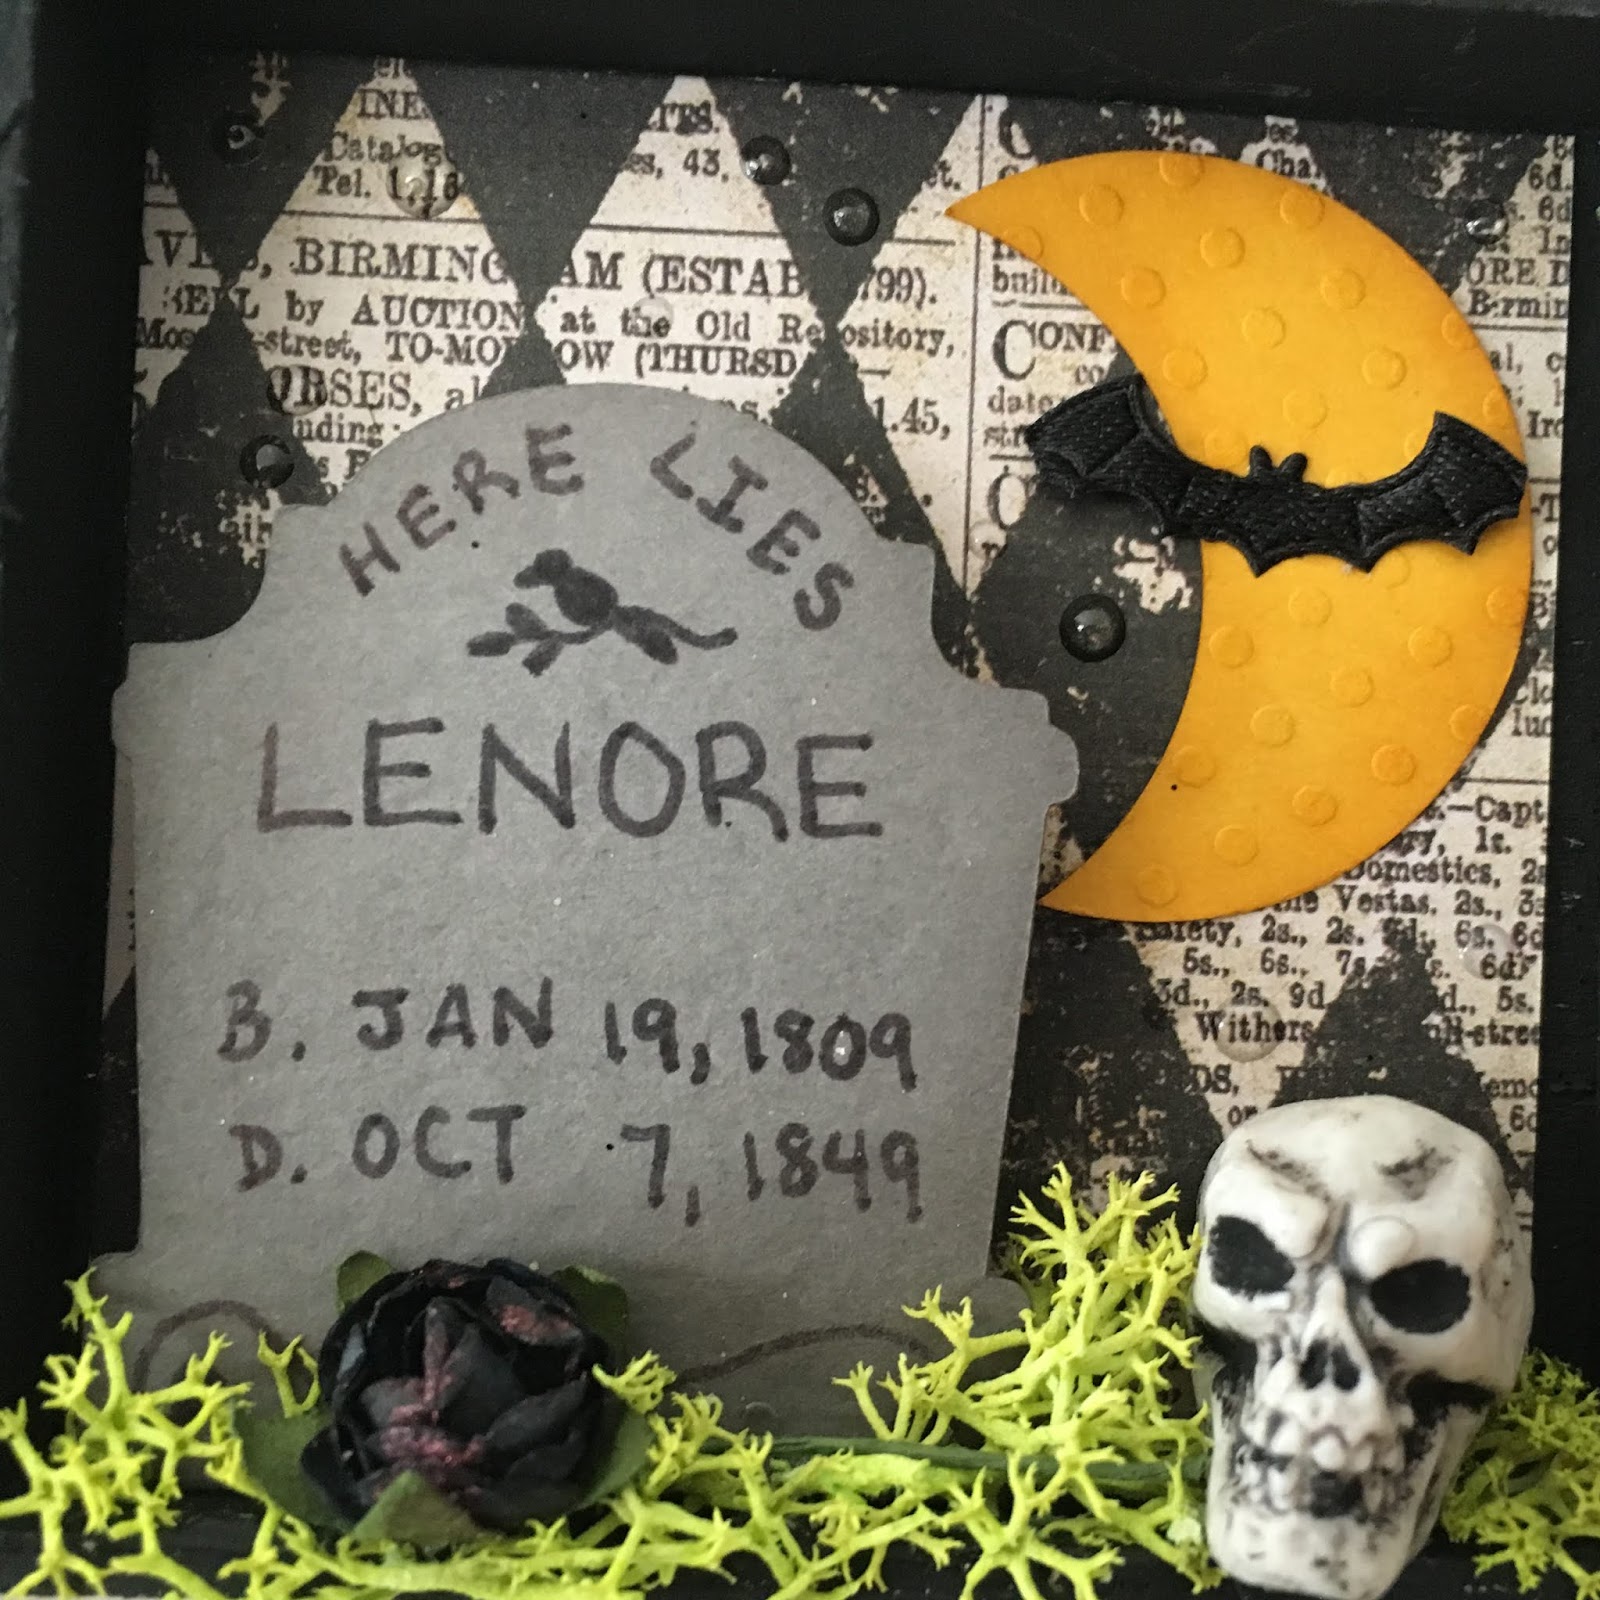 Nevermore Altered Scrabble Rack Altered Scrabble Tile Halloween Home Decor Spooky October Edgar Allan Poe The Raven Never More October 31